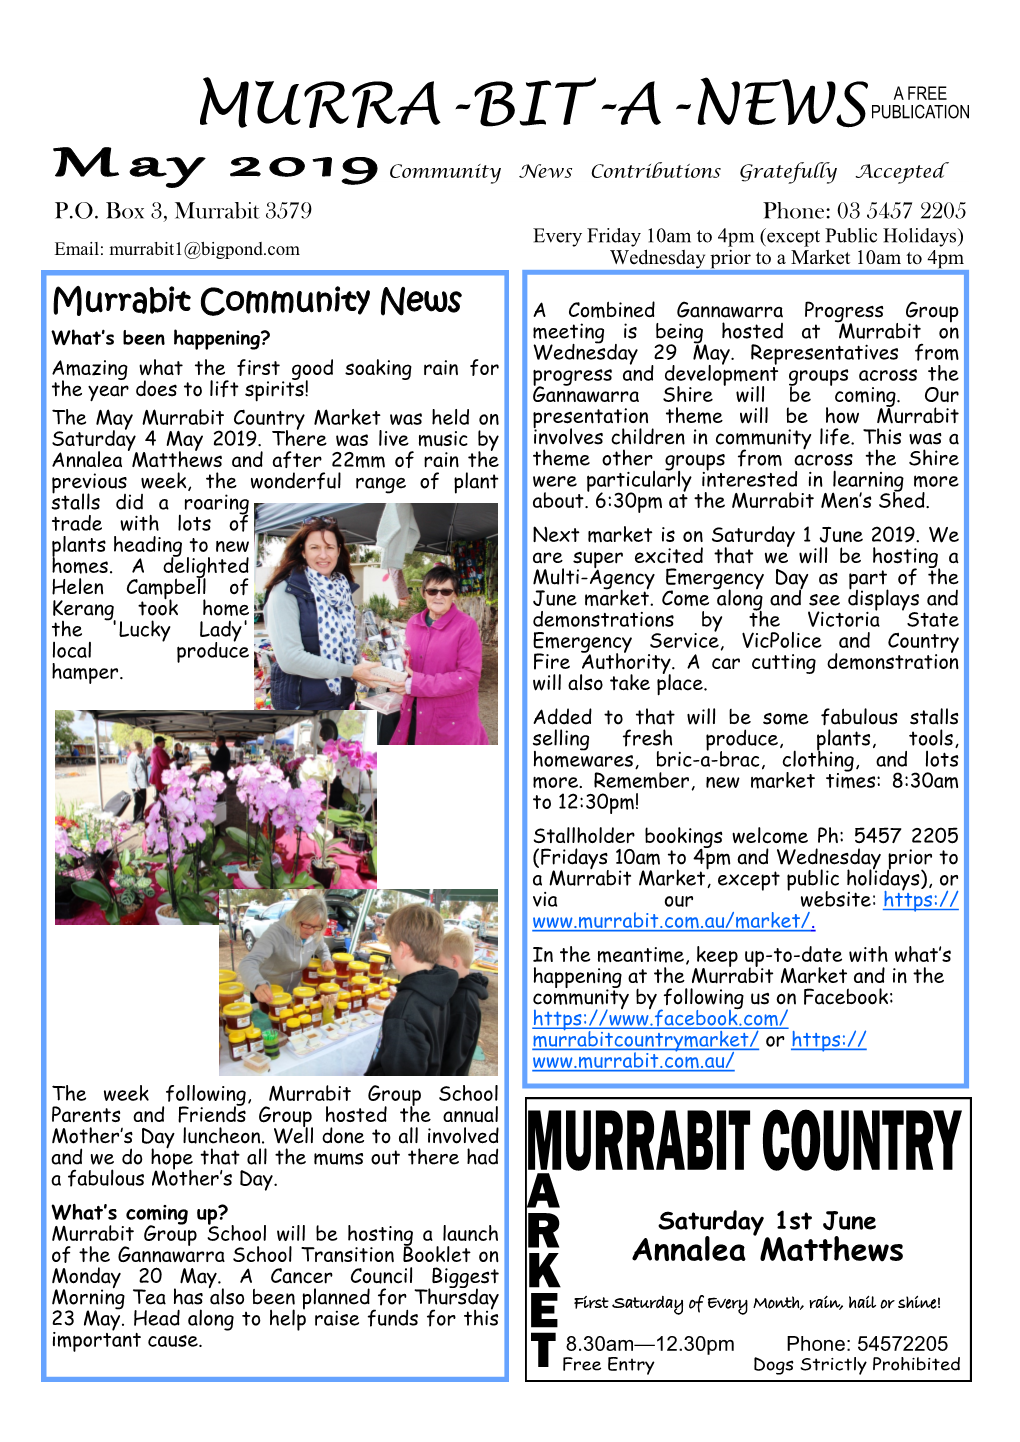 Murrabit Community News Annalea Matthews